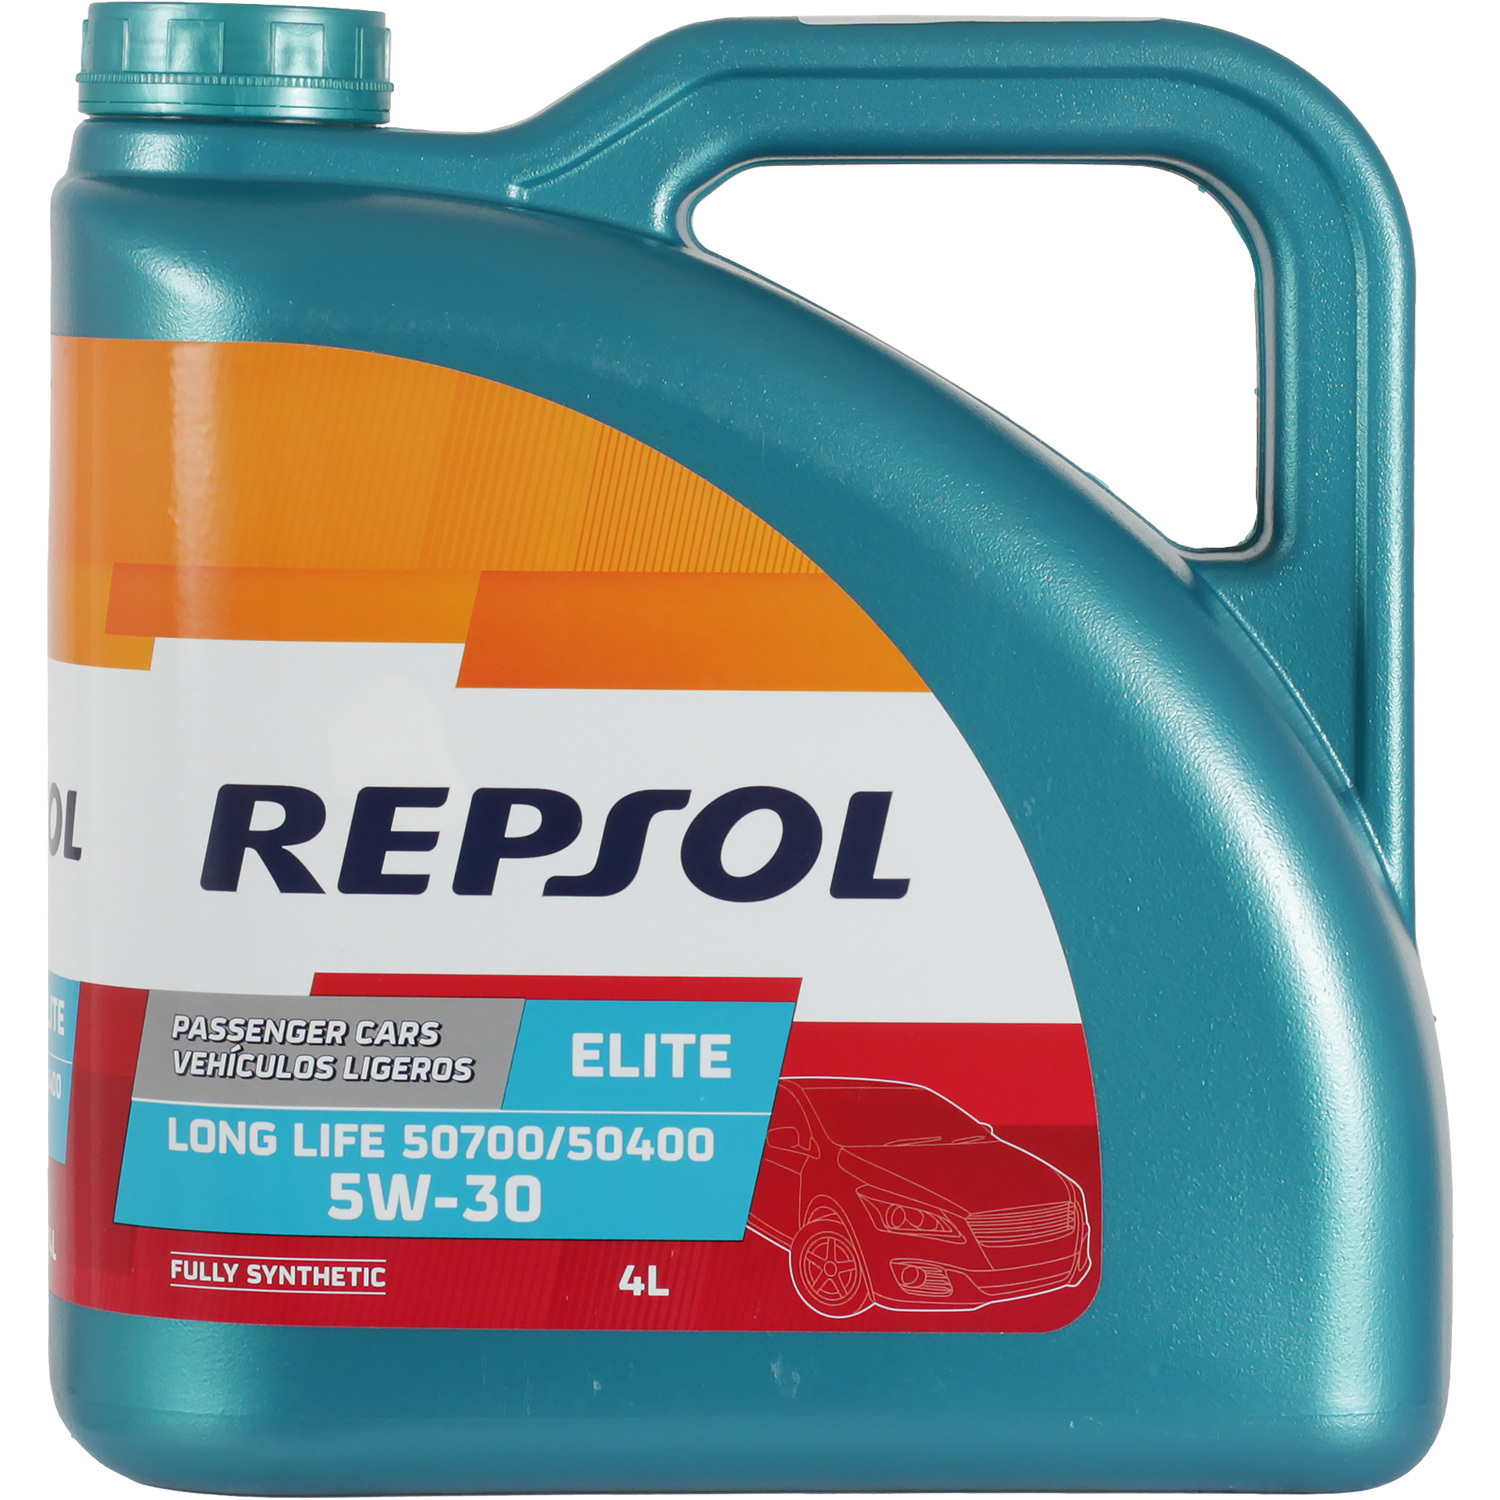 Repsol Масло моторное Repsol ELITE LONG LIFE 50700/50400 5W-30 4л масло моторное repsol 5 30 elite long life 50700 50400 rp синтетическое 4 л